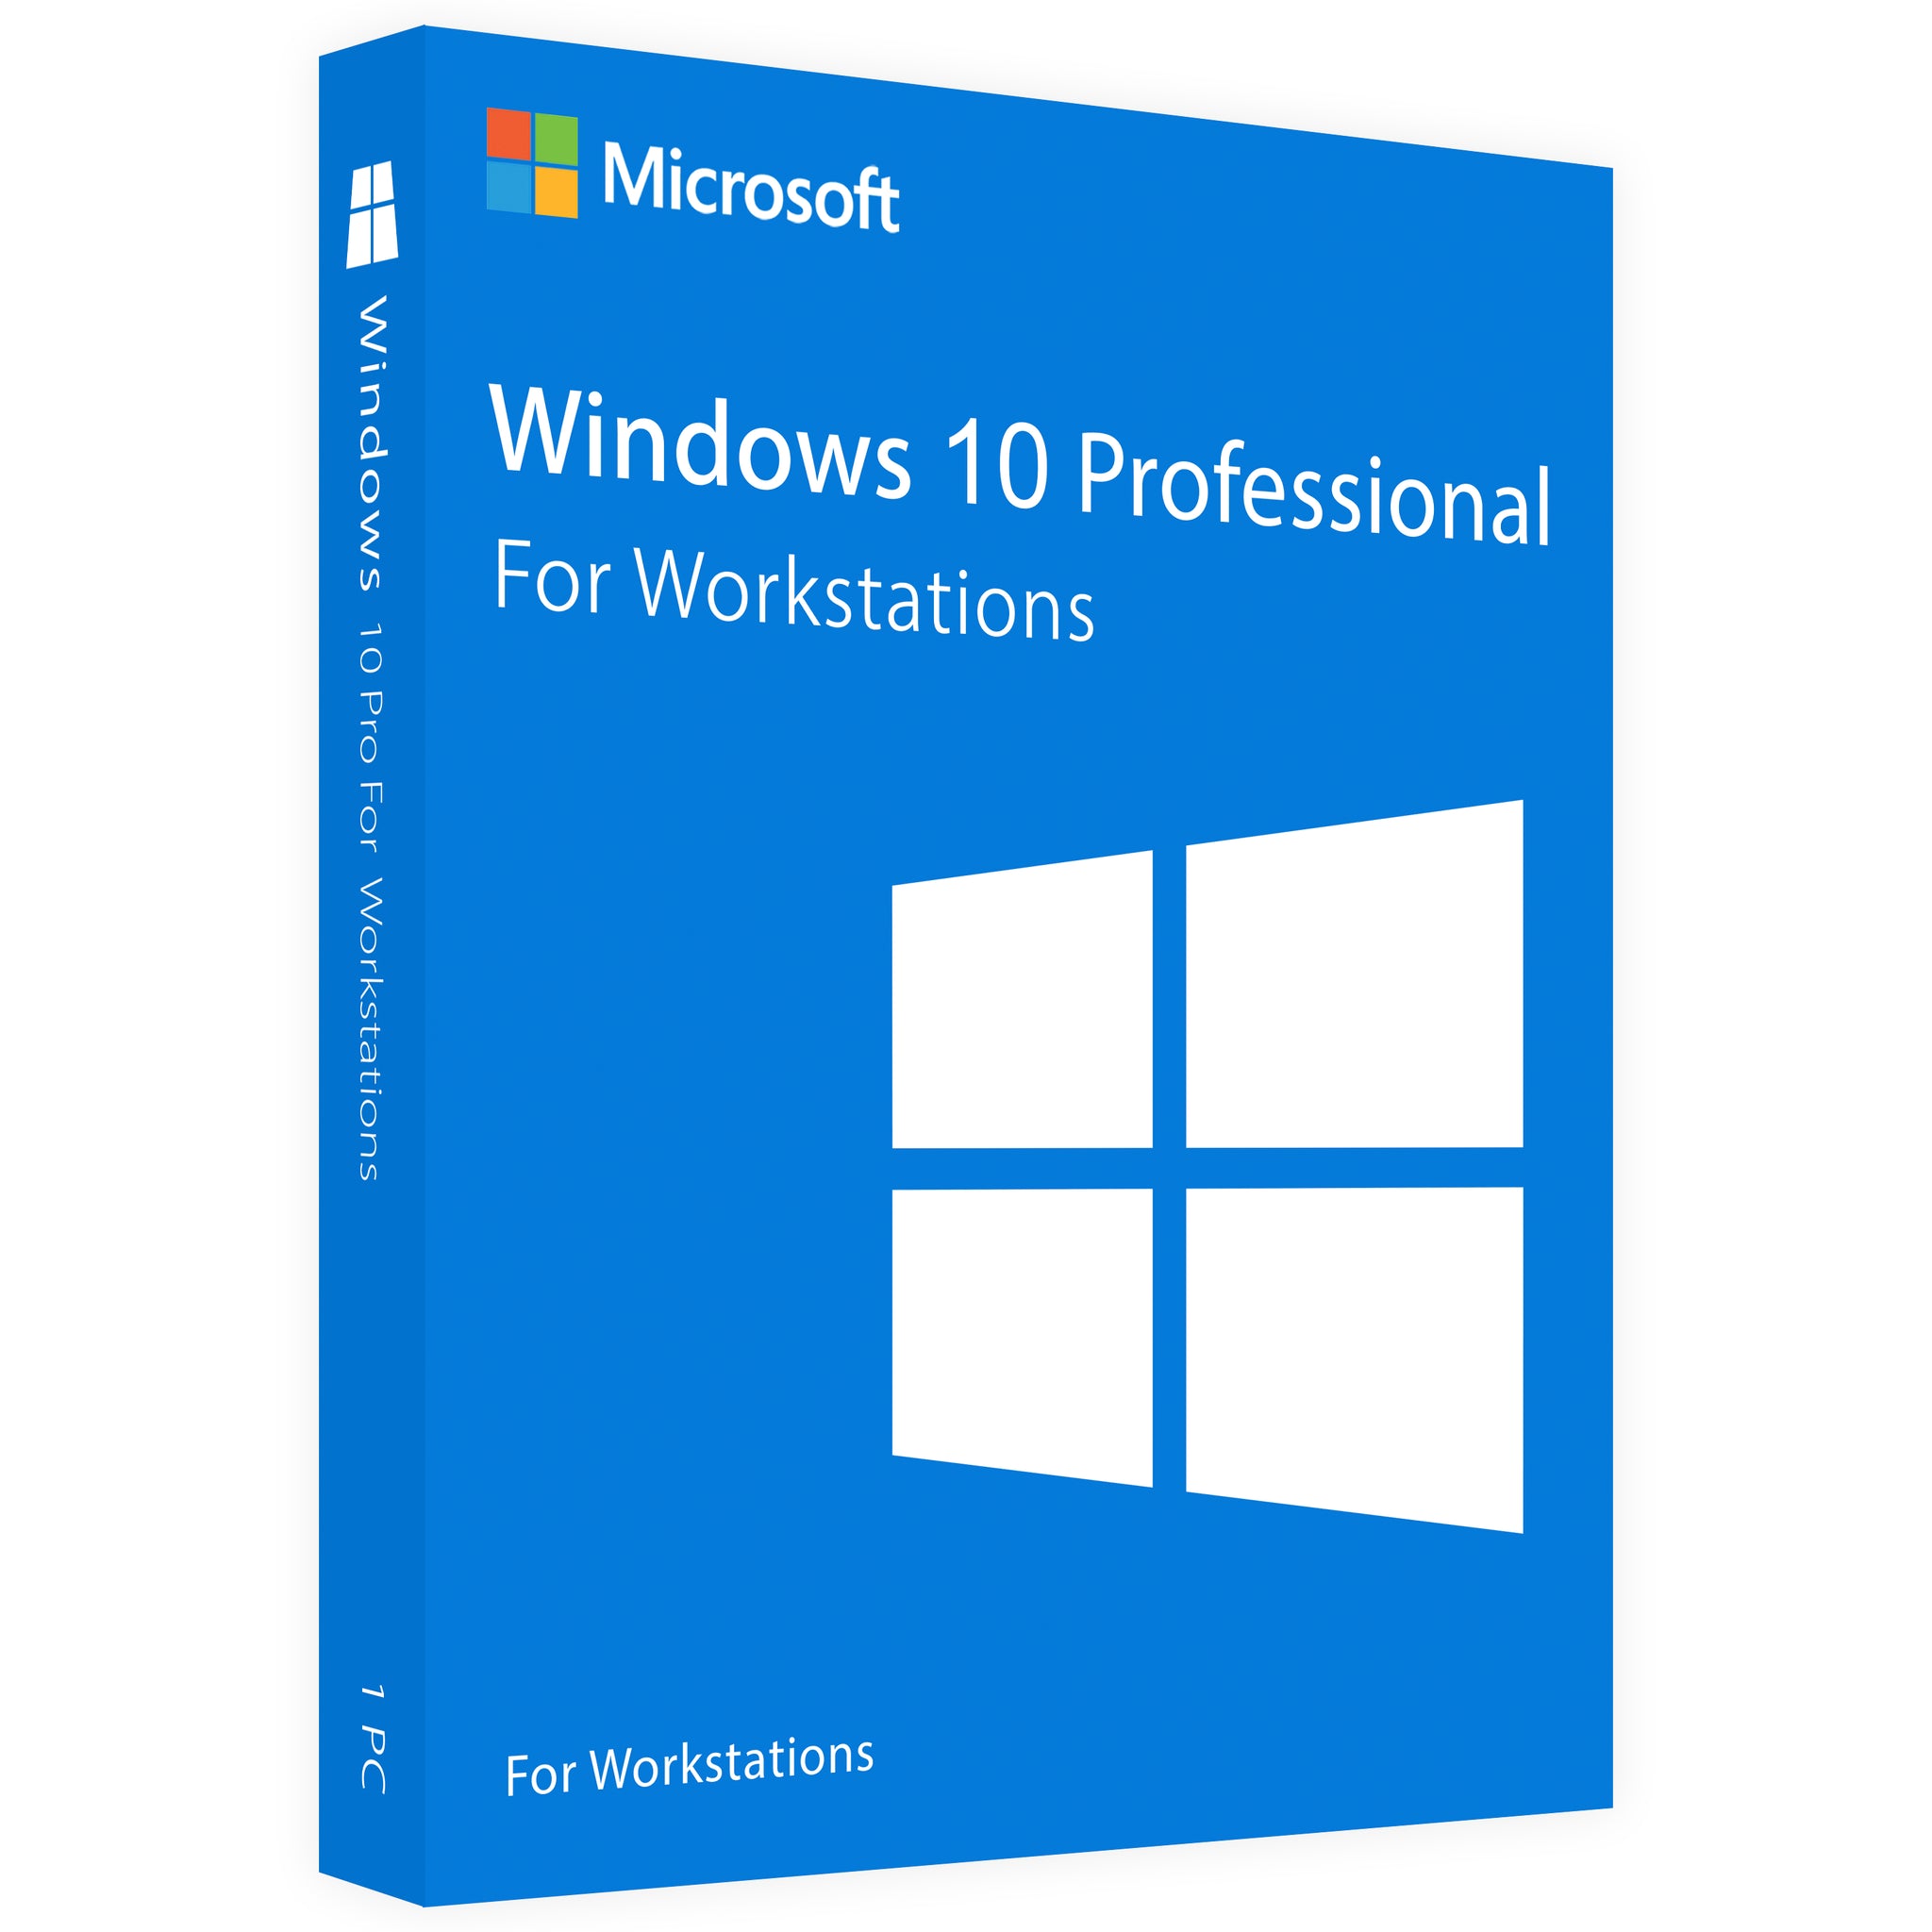 Microsoft Windows 10 Pro Workstation - Lifetime License Key for 1 PC